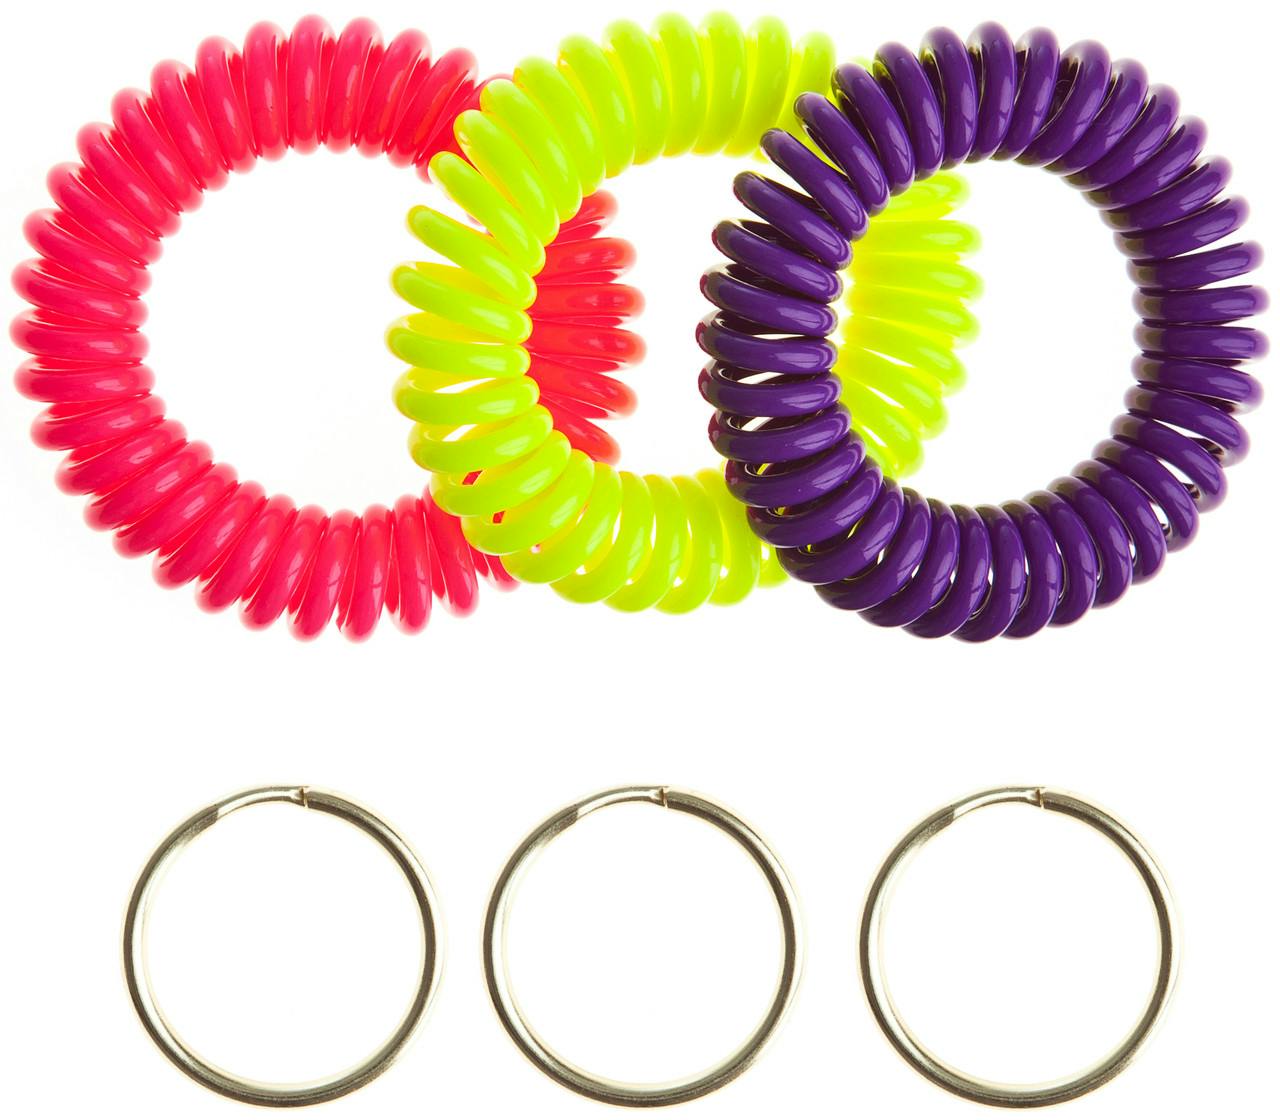 Wrist Coils (3 Pack) Neon/Pink/Purple